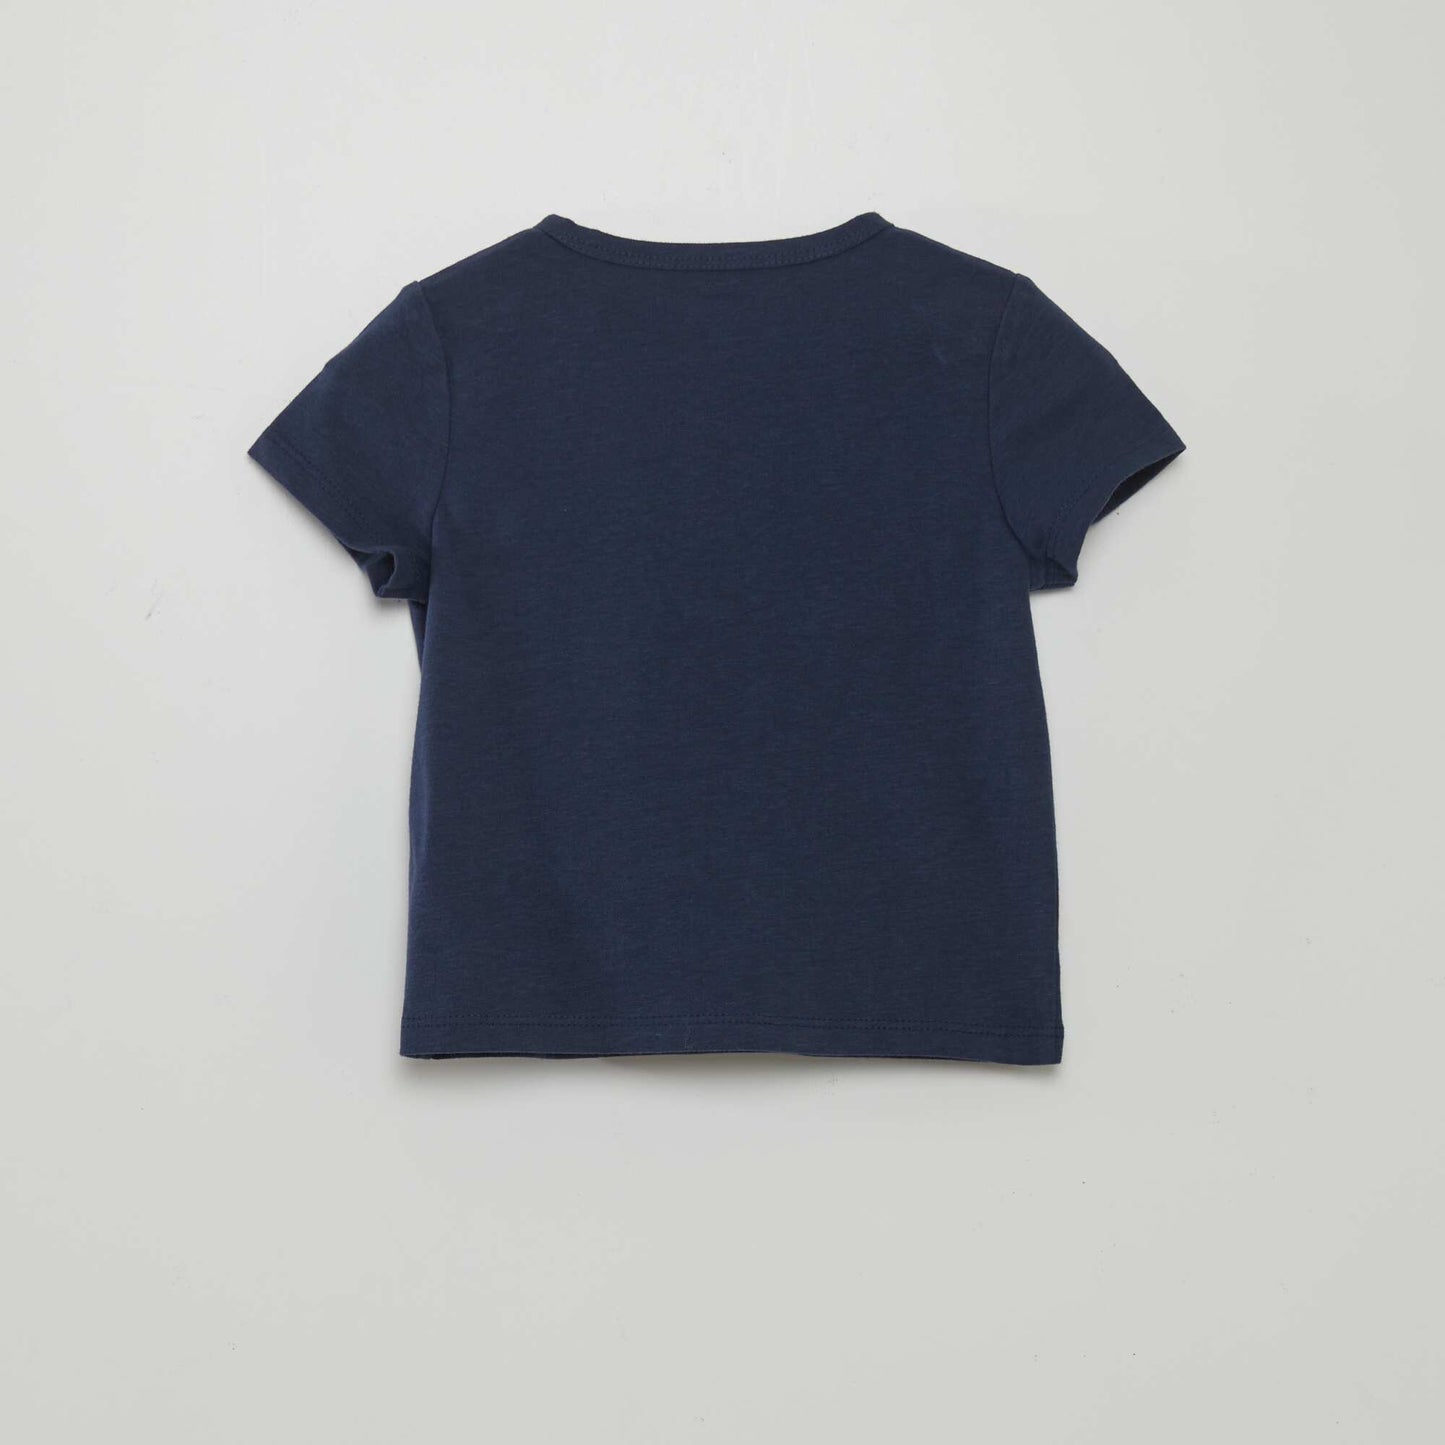 Tee-shirt uni avec col boutonné Bleu marine